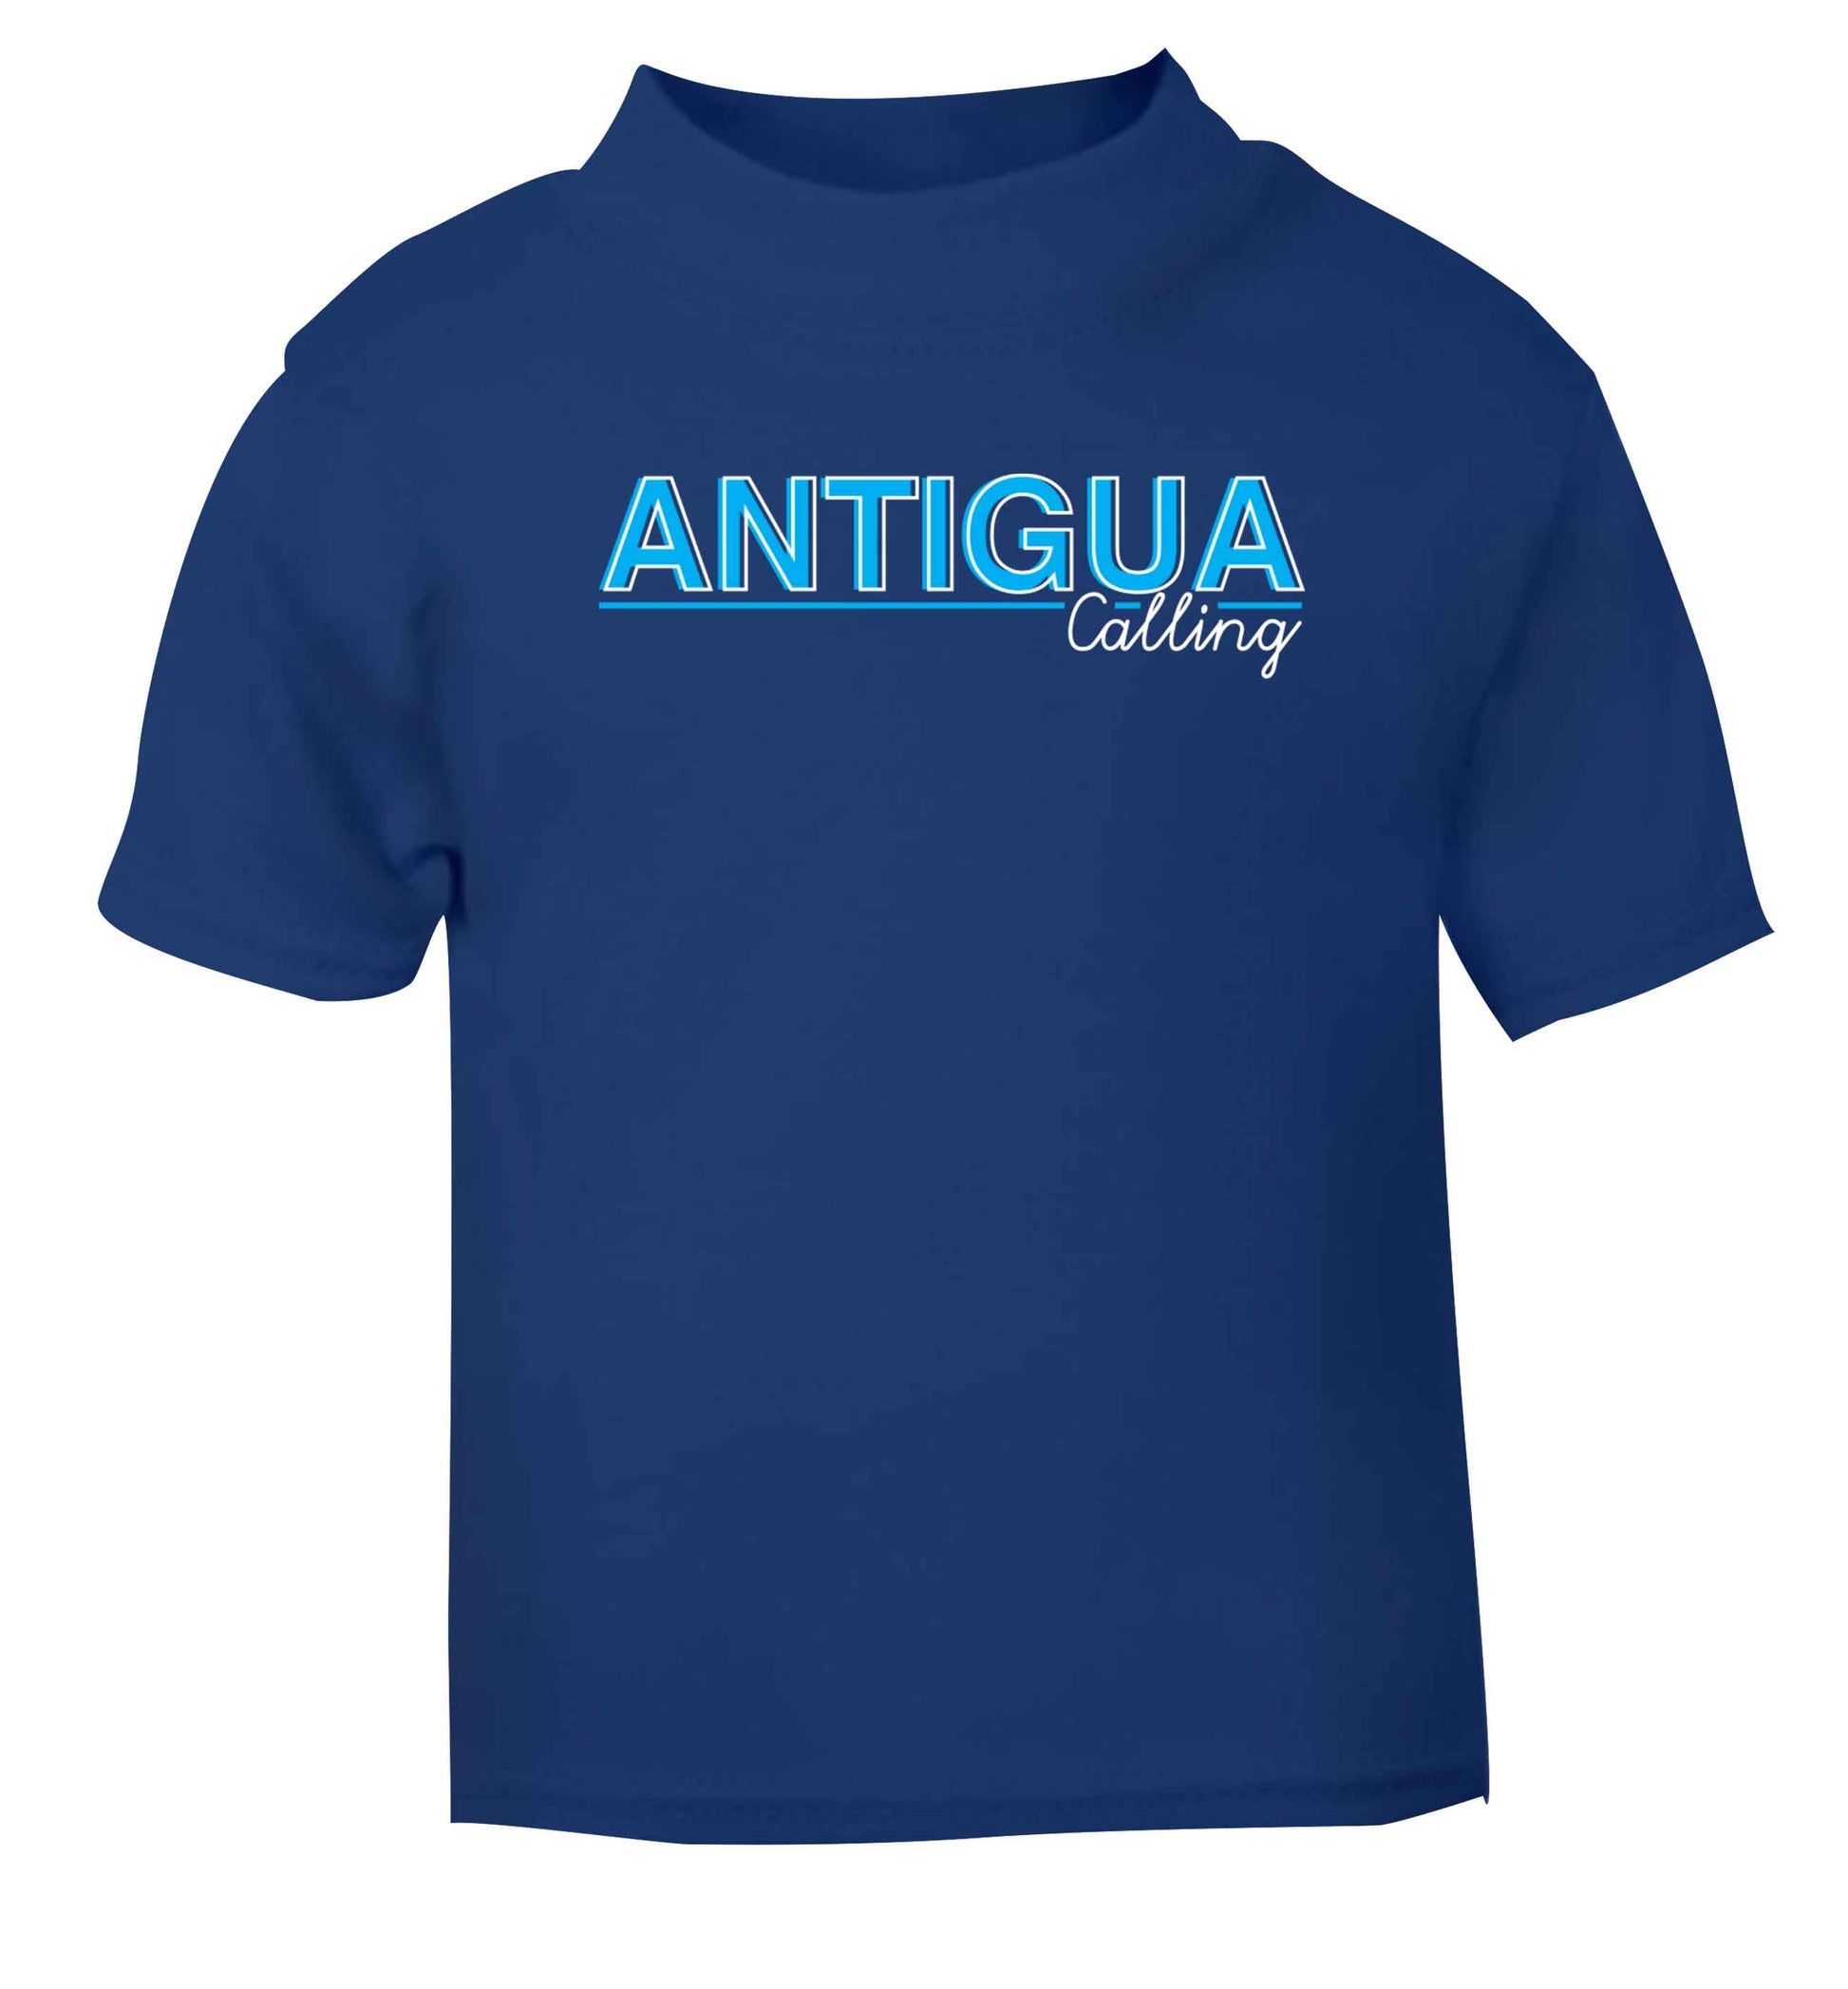 Antigua calling blue Baby Toddler Tshirt 2 Years